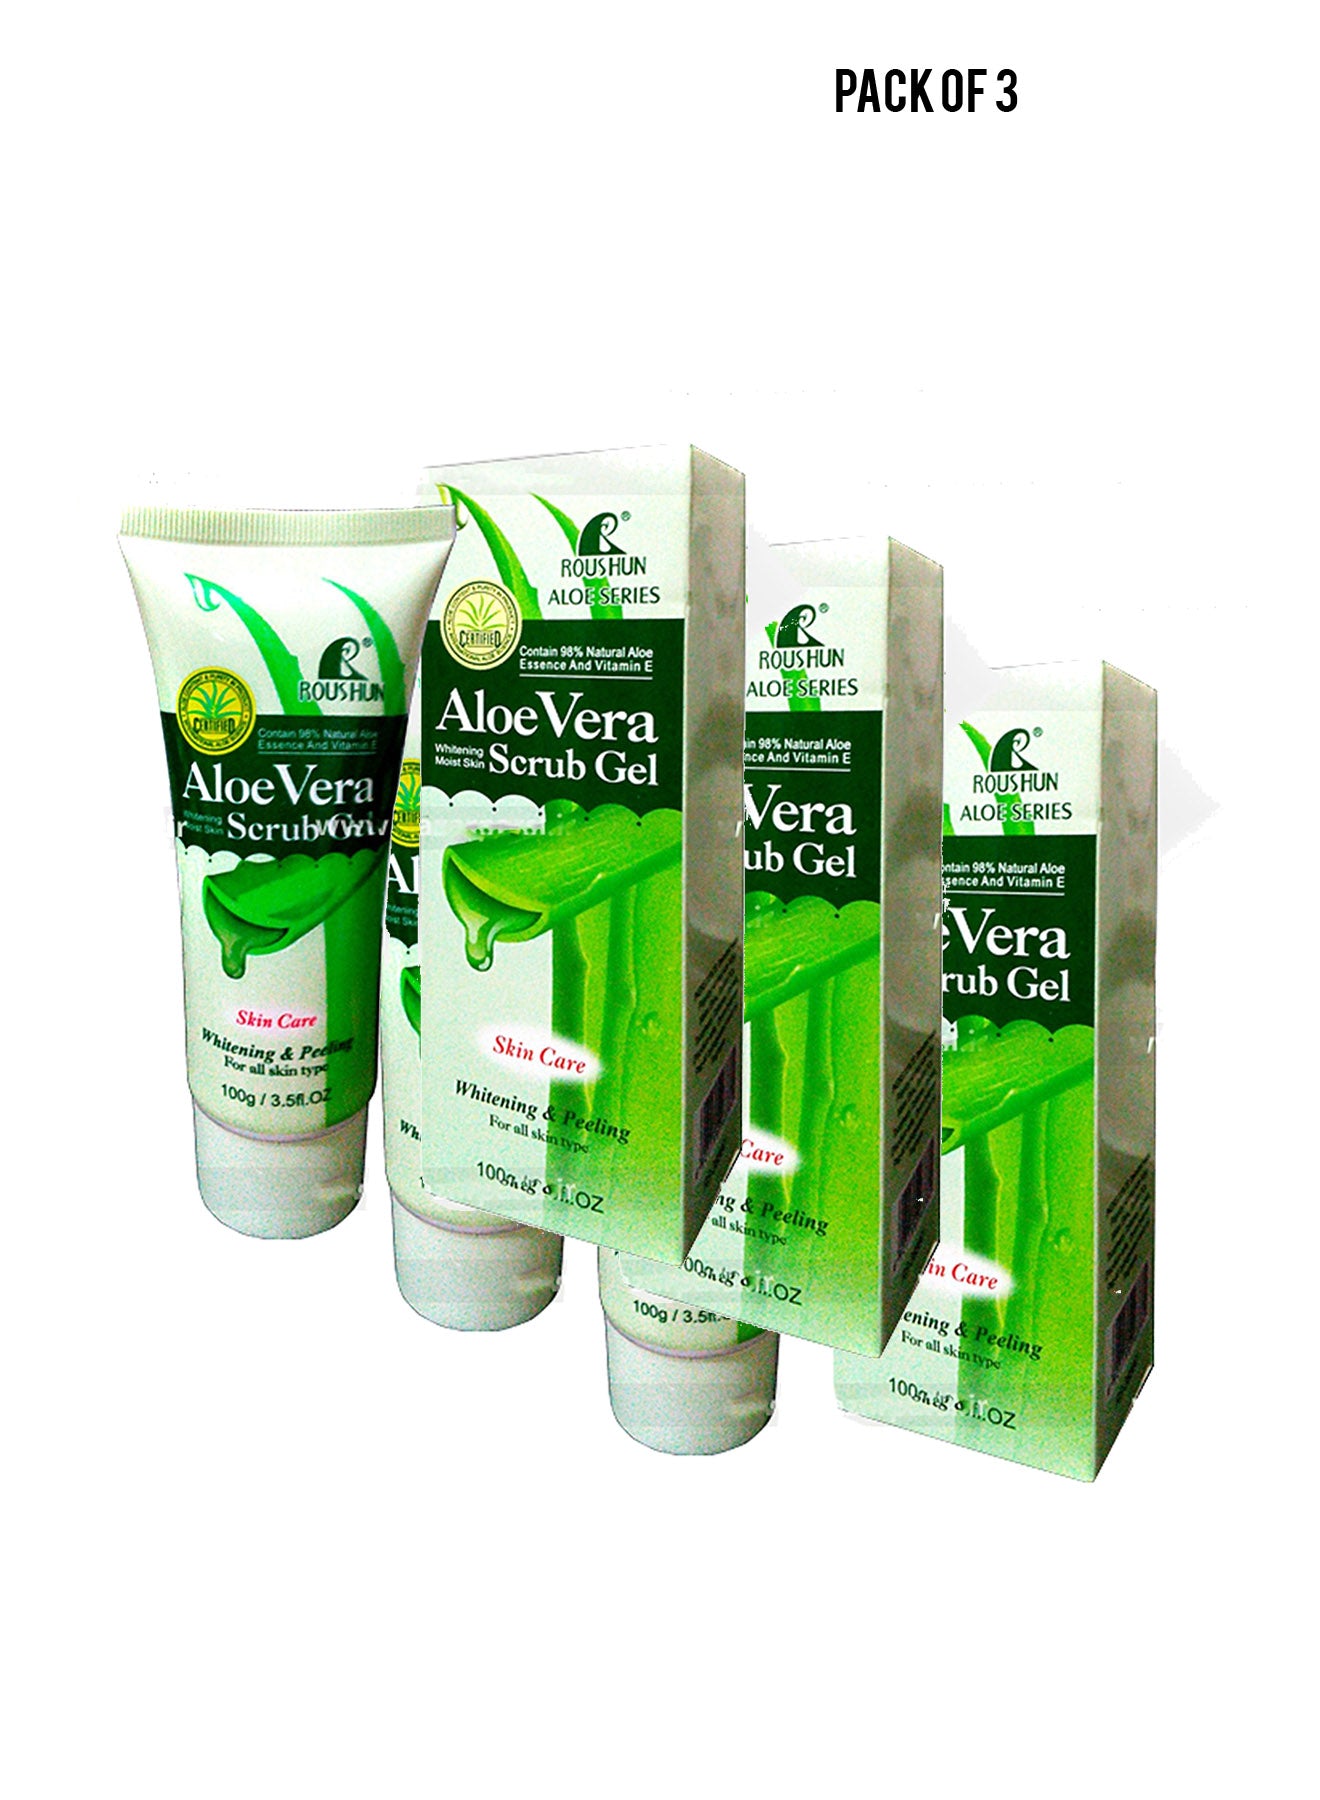 Roushun Aloe Vera Facial Scrub Gel 100g Value Pack of 3 